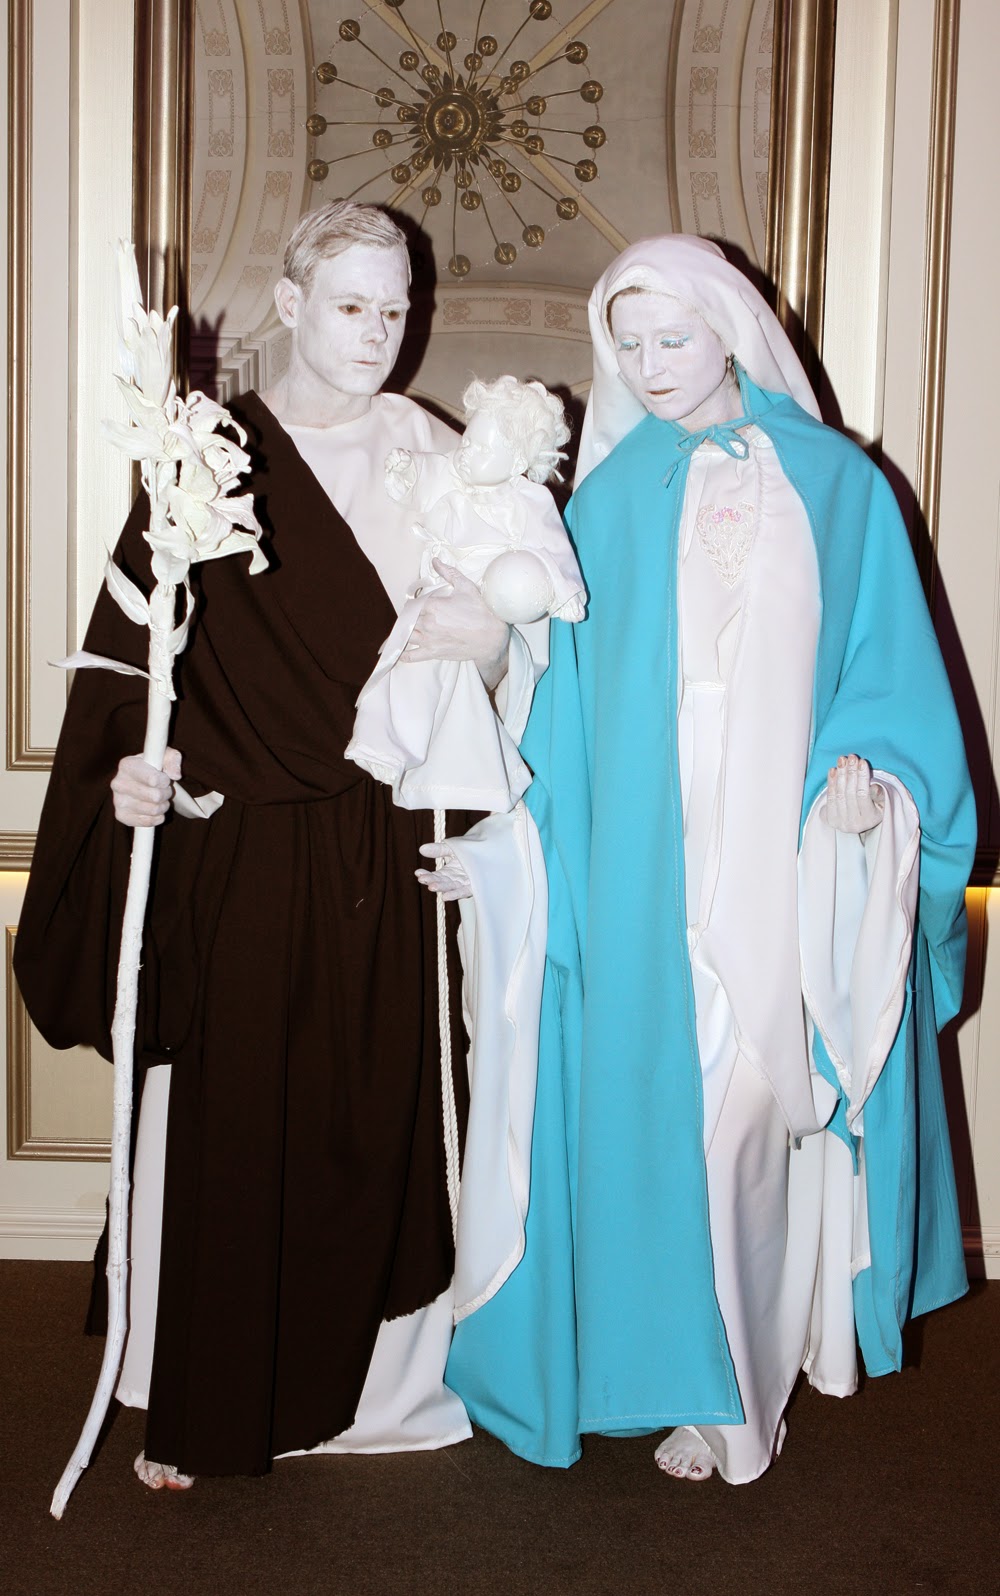 Human Statue Bodyart: Catholic, Religious Human Statues